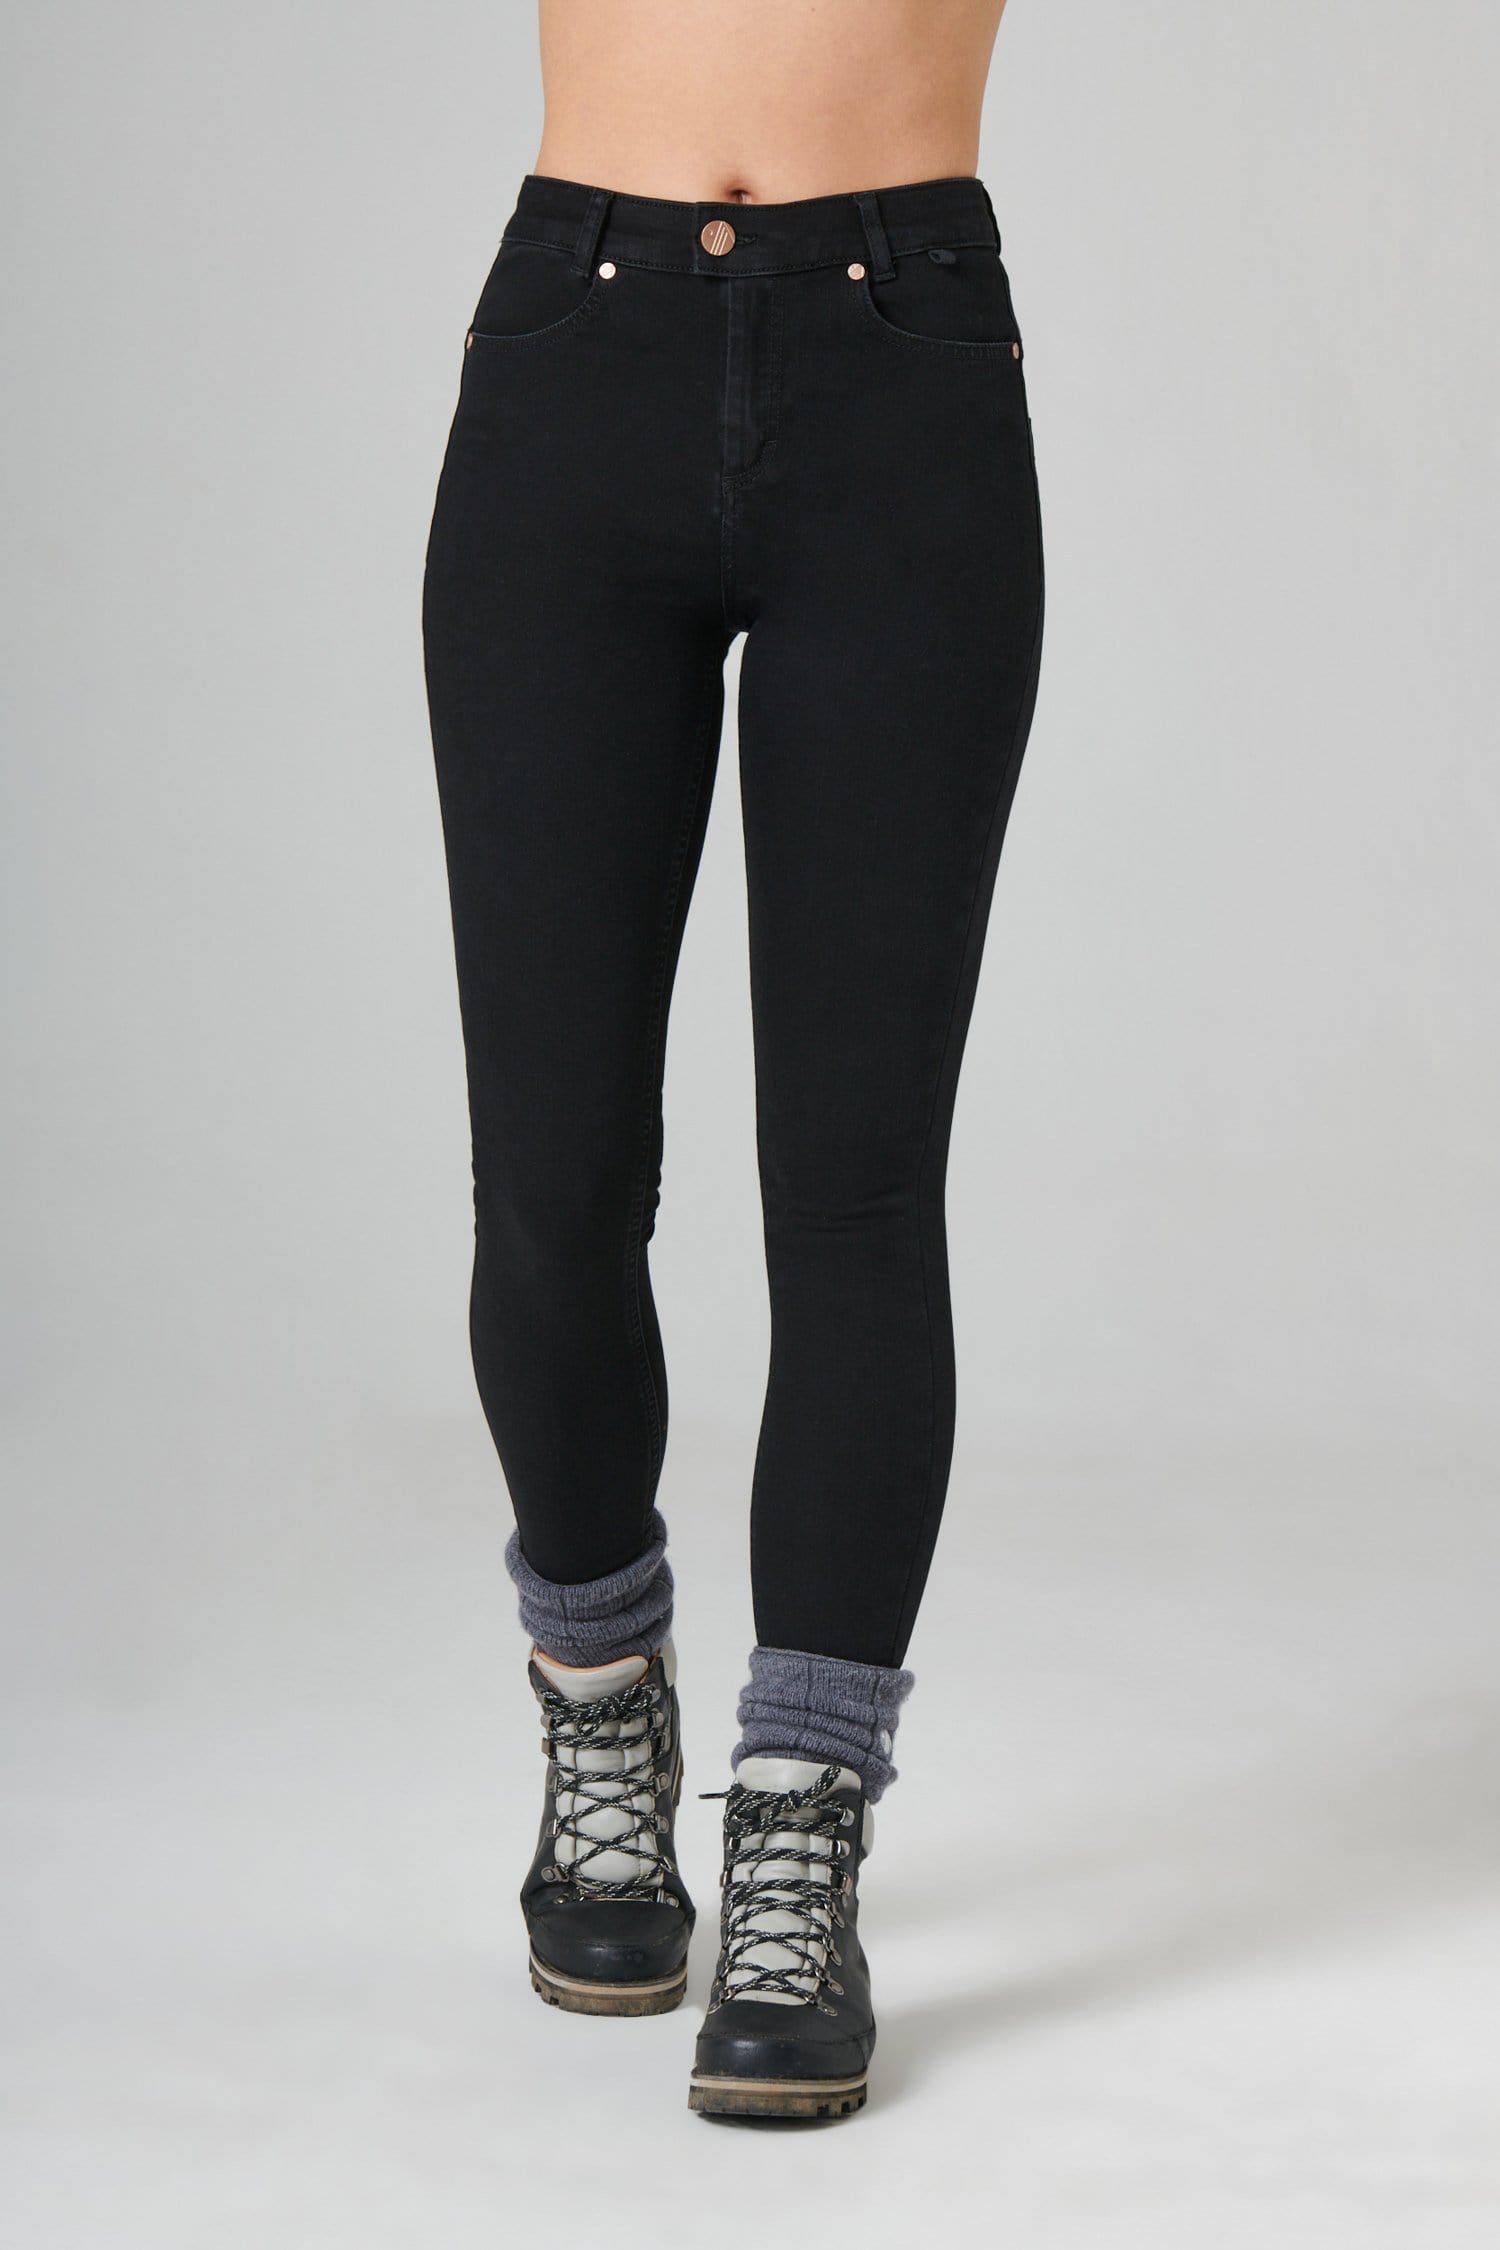 The Skinny Outdoor Jeans - Black Denim - 28r / Uk10 - Womens - Acai Outdoorwear